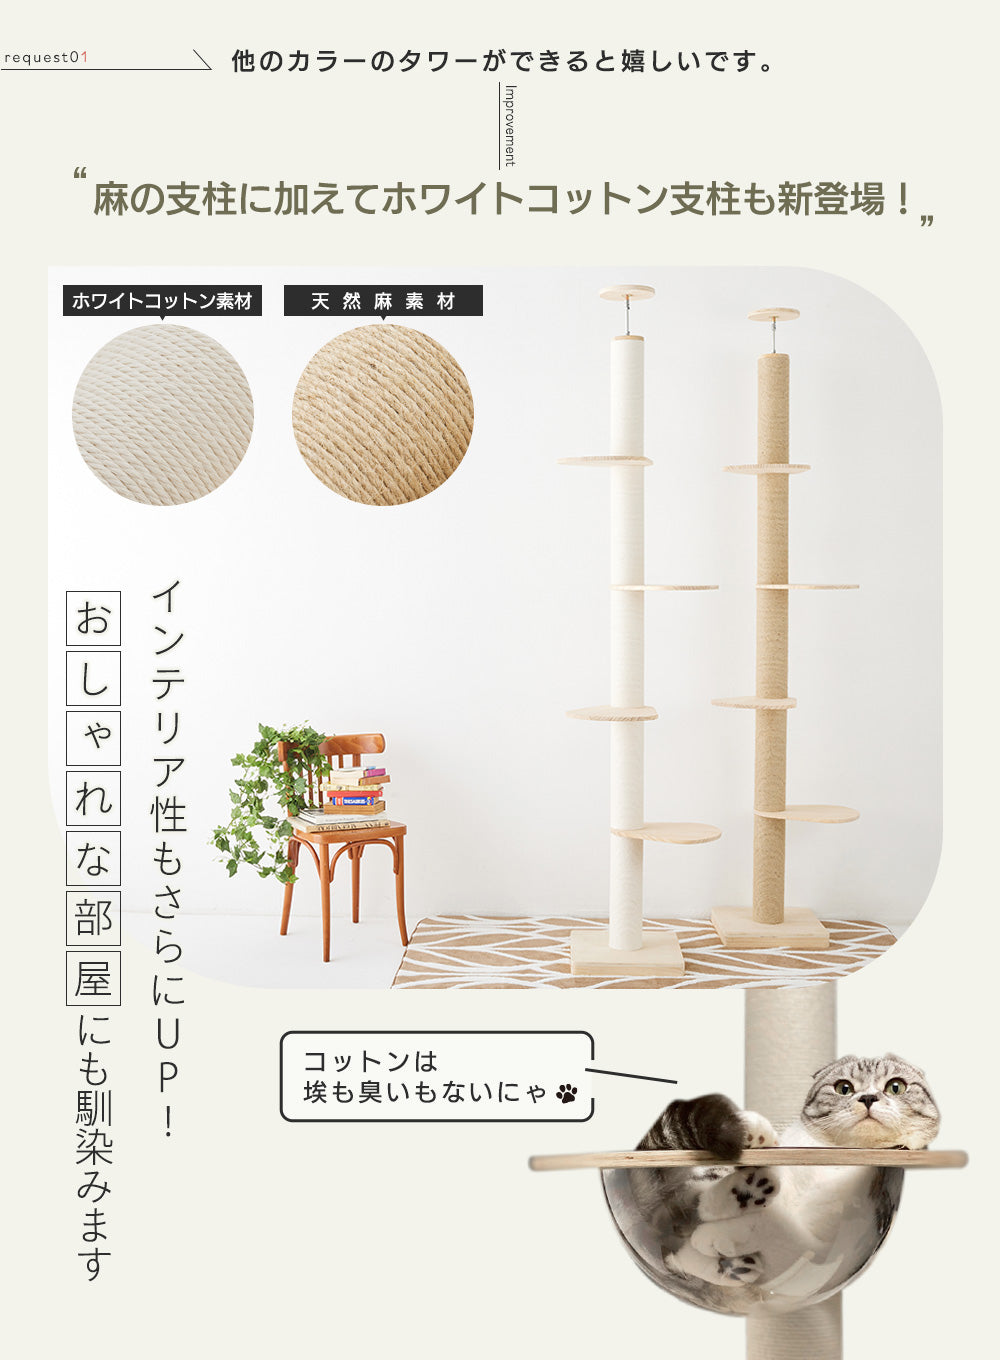 SUMIKA キミの木シリーズ 突っ張り型木製キャットタワー 【ハイエンドモデル】